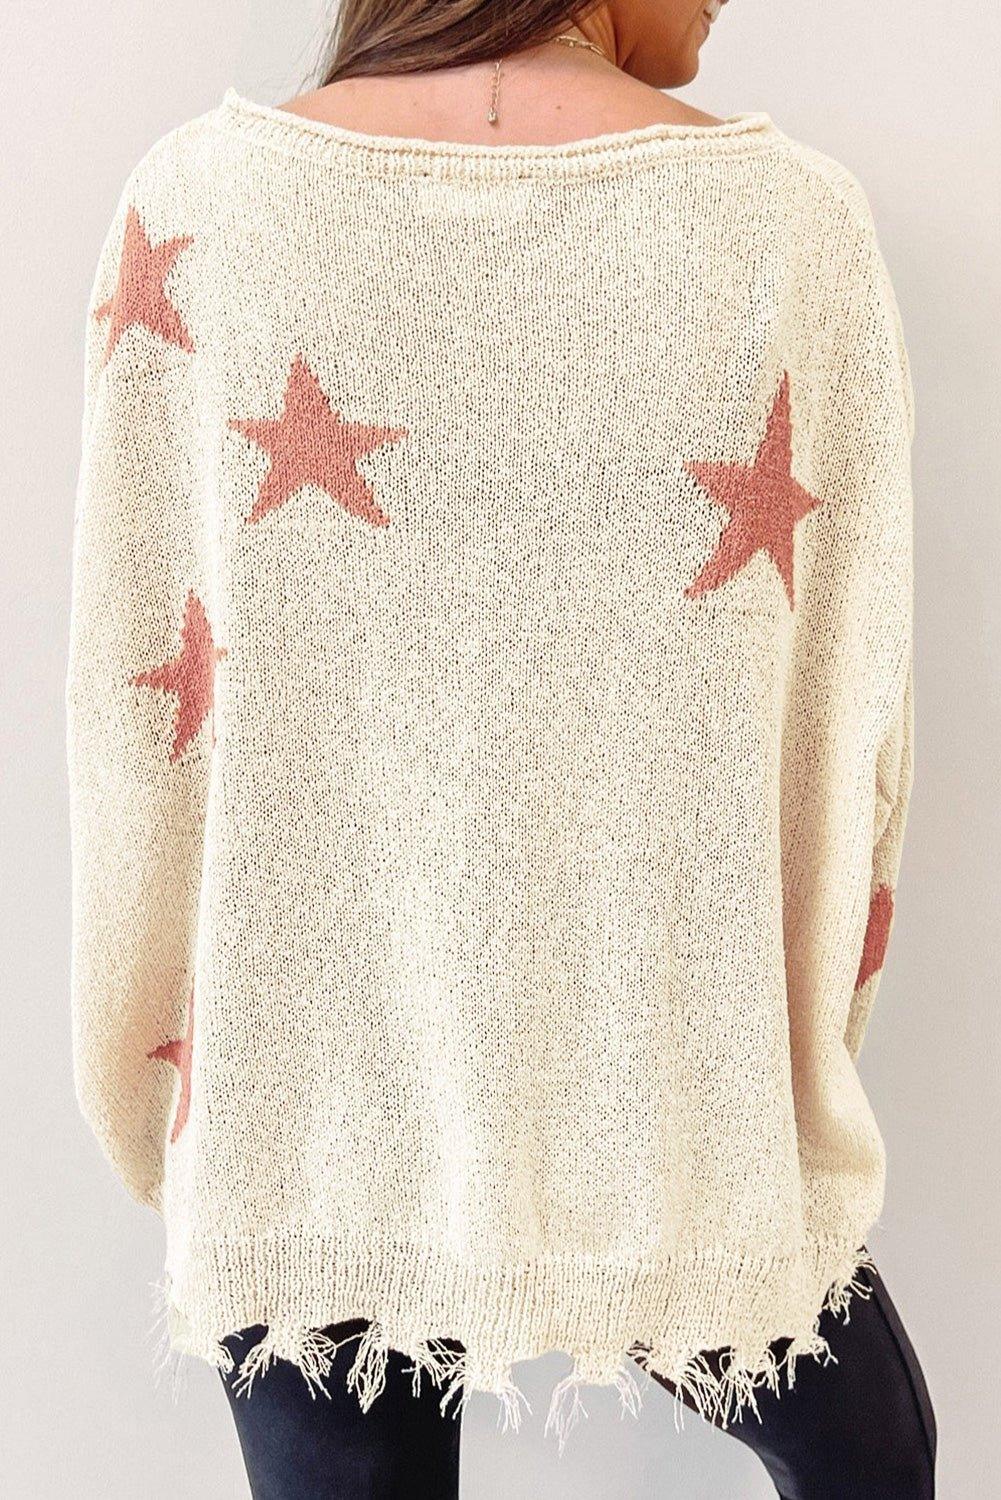 Starry Beige Distressed Sweater